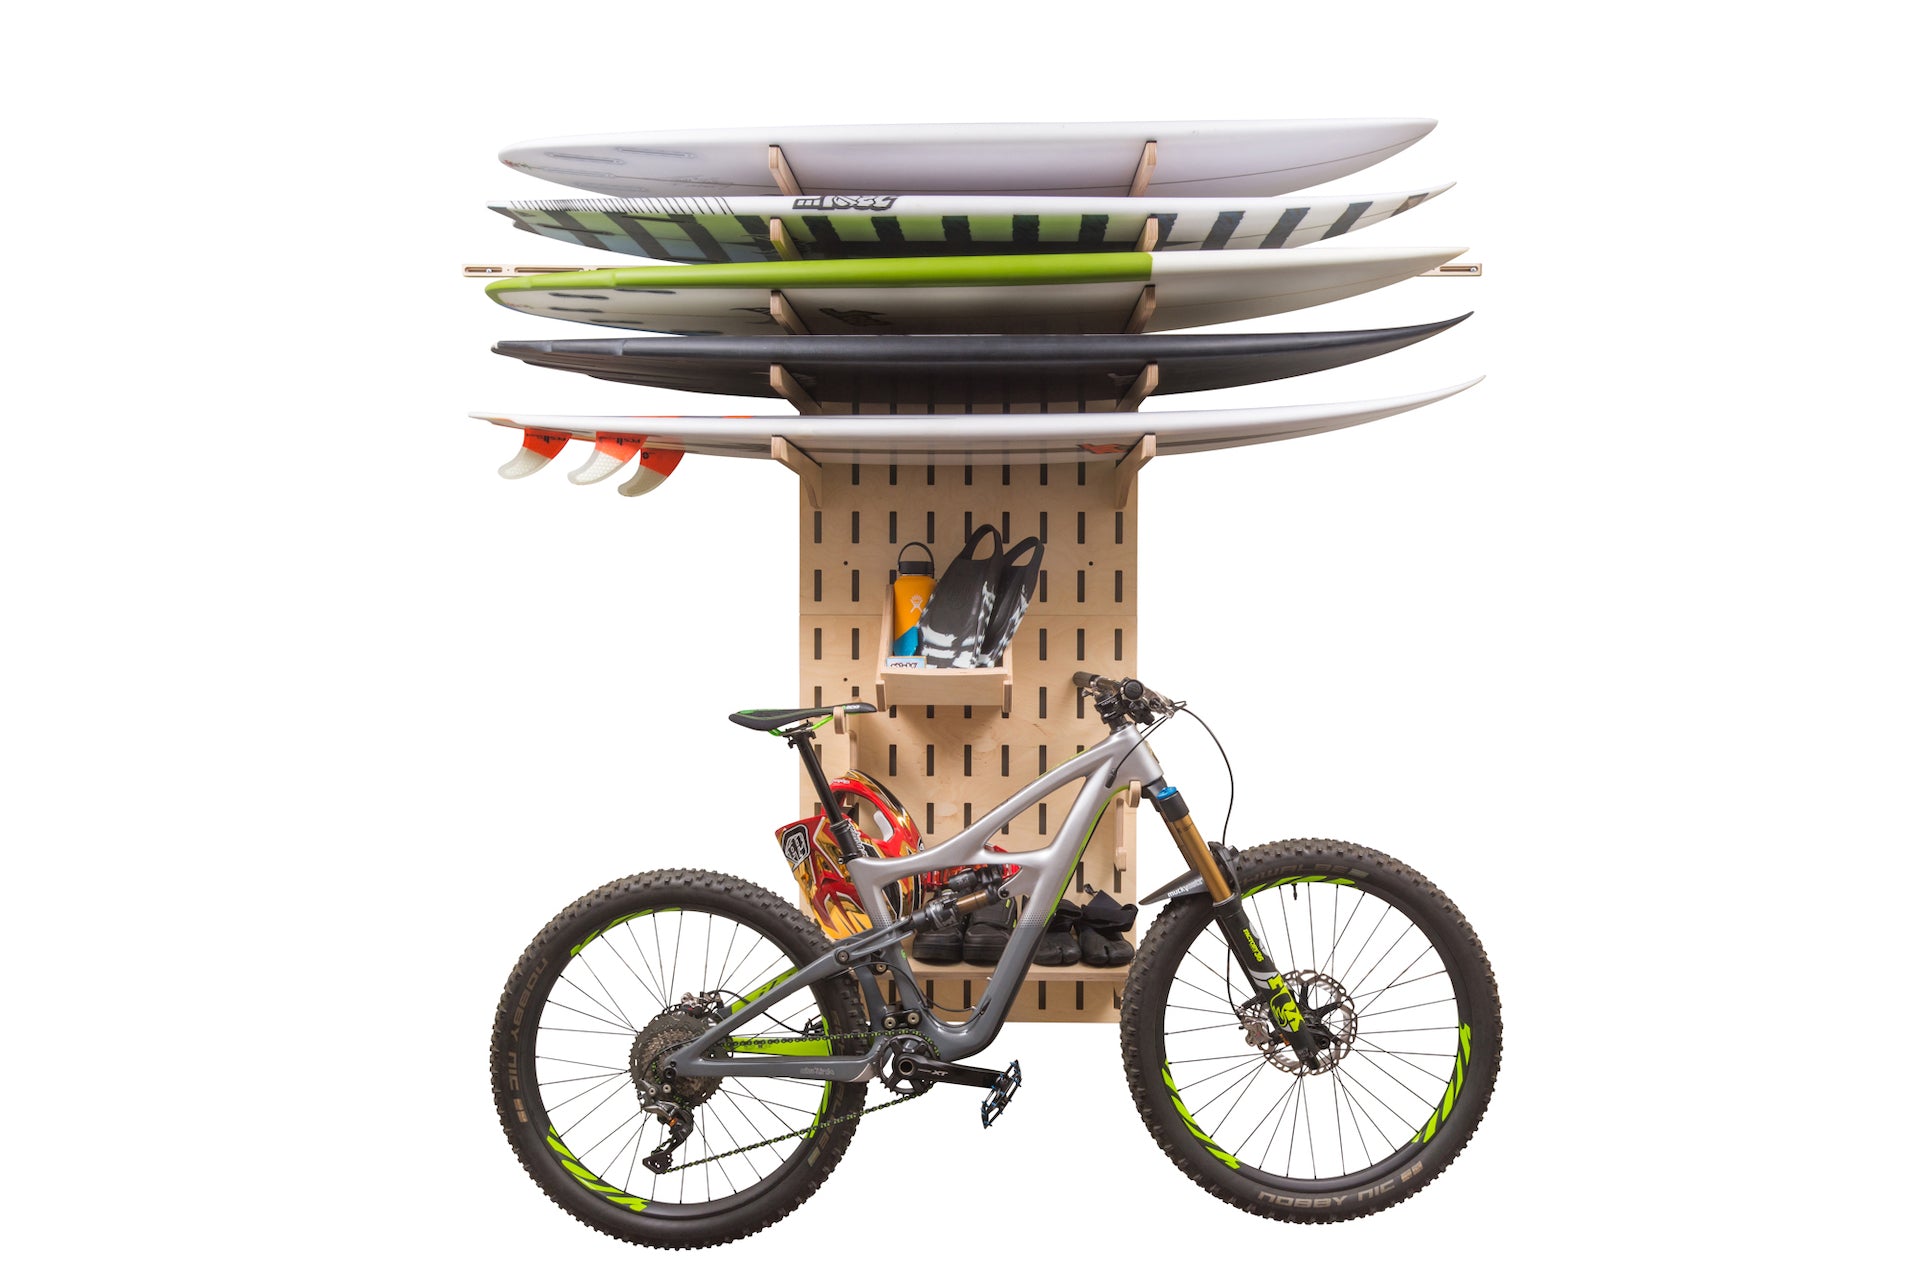 Modern Bike surf Rack for urban condo, apartment, or home.